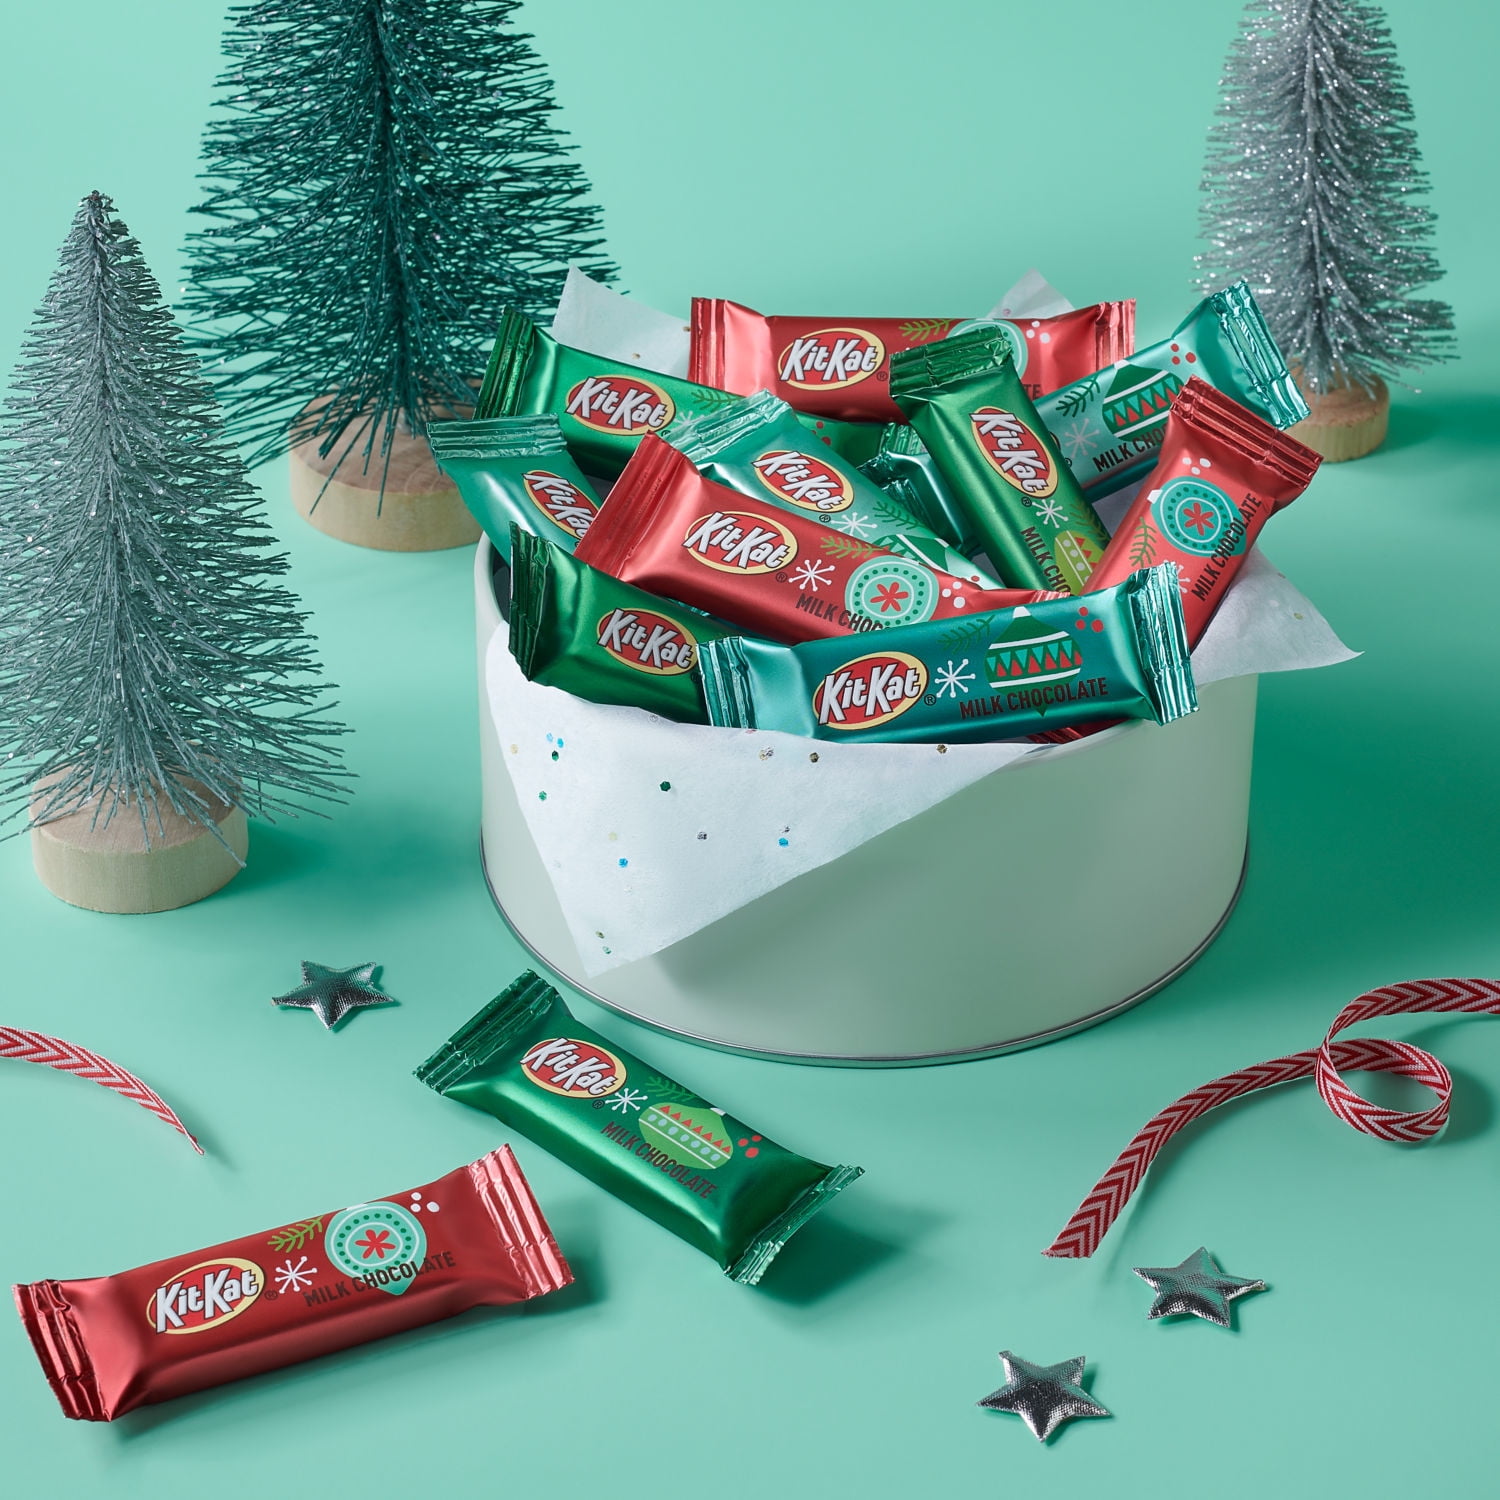 Kit Kat® Miniatures Milk Chocolate Wafer Christmas Candy, Bag 9.6 oz